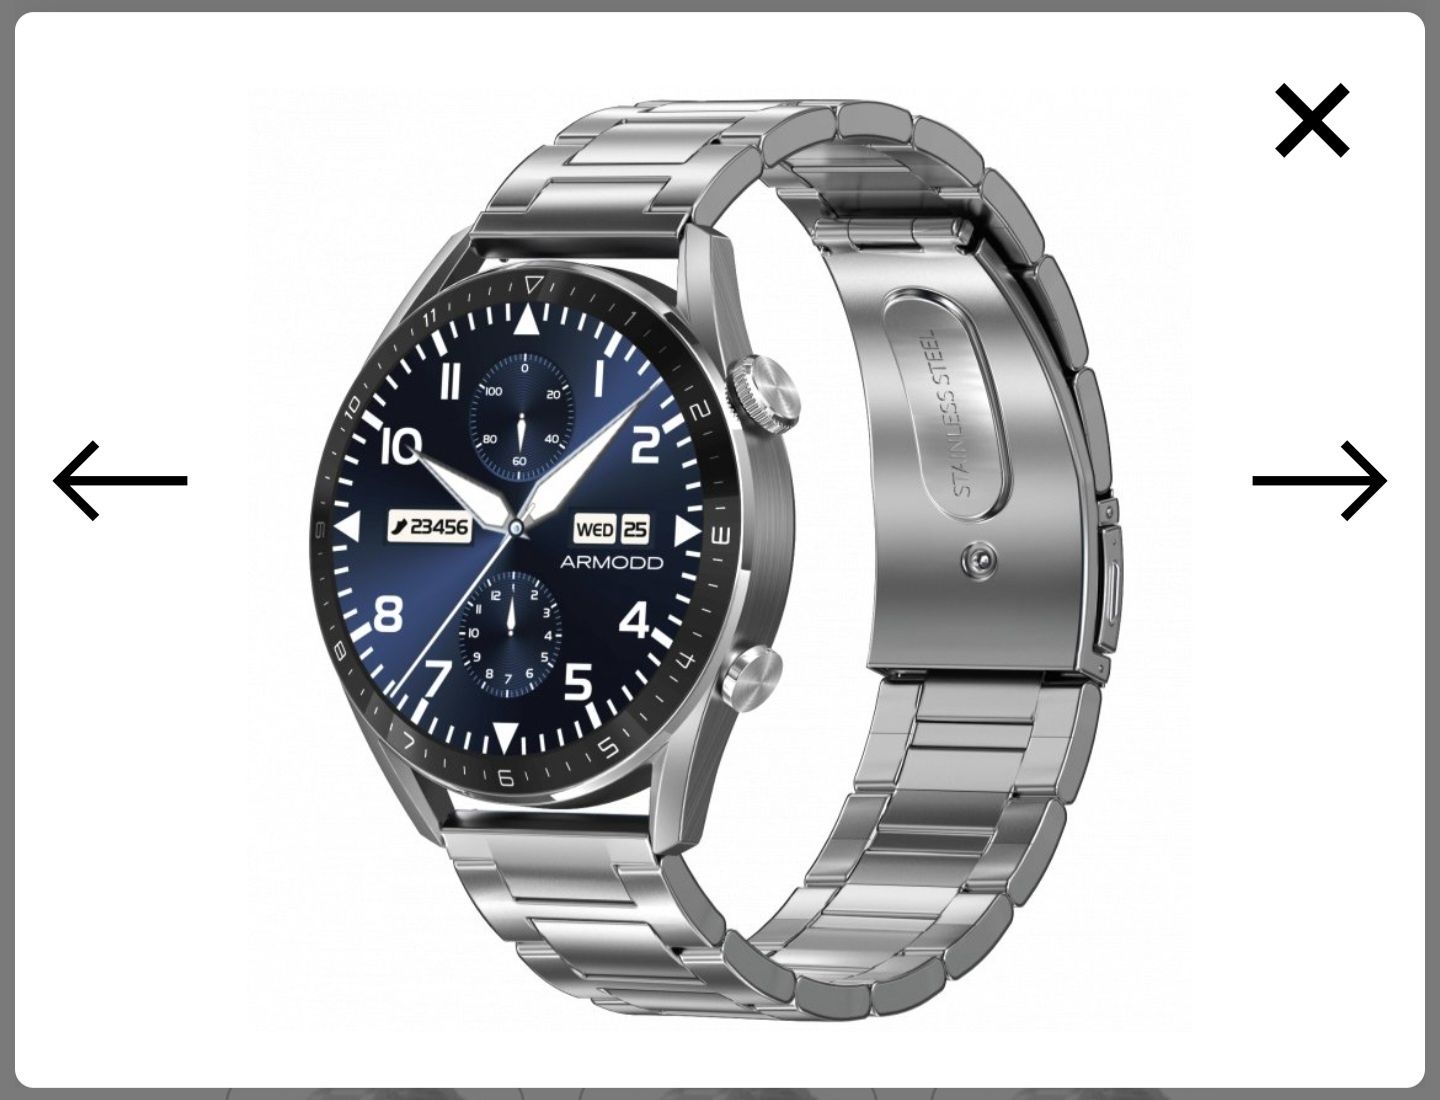 Smartwatch Armodd silent watch 5 pro